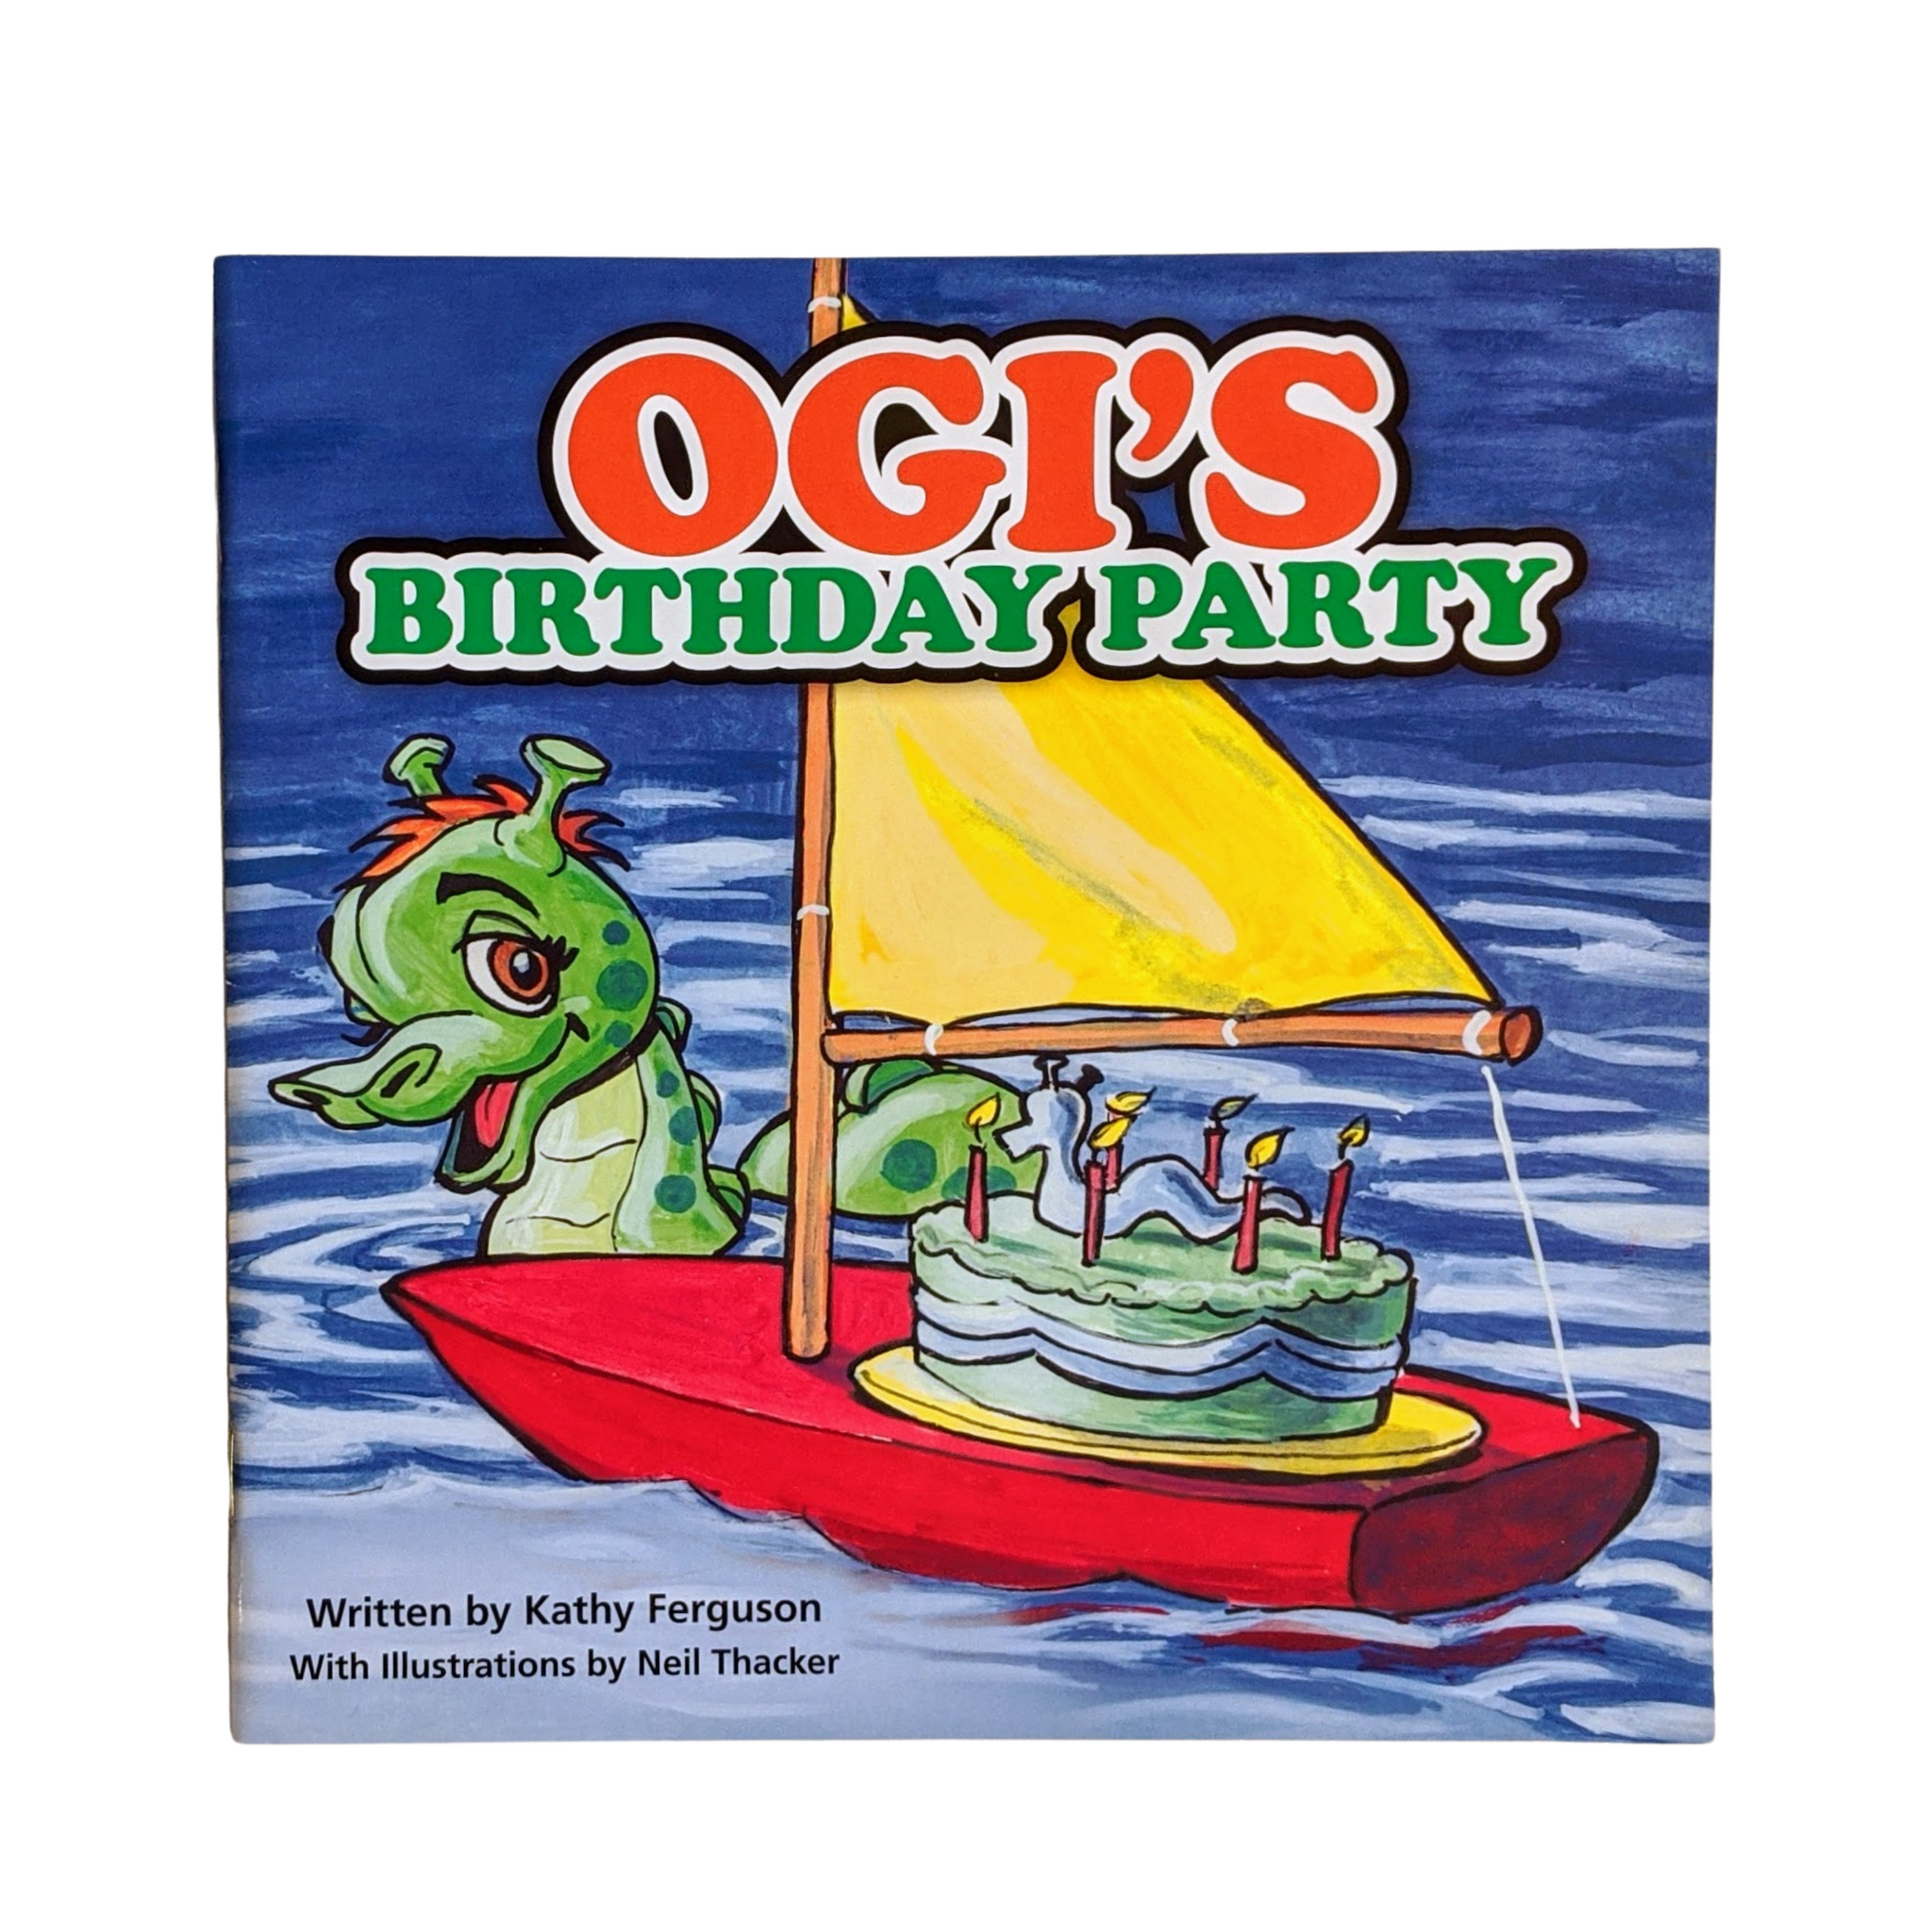 Ogi's Birthday Party